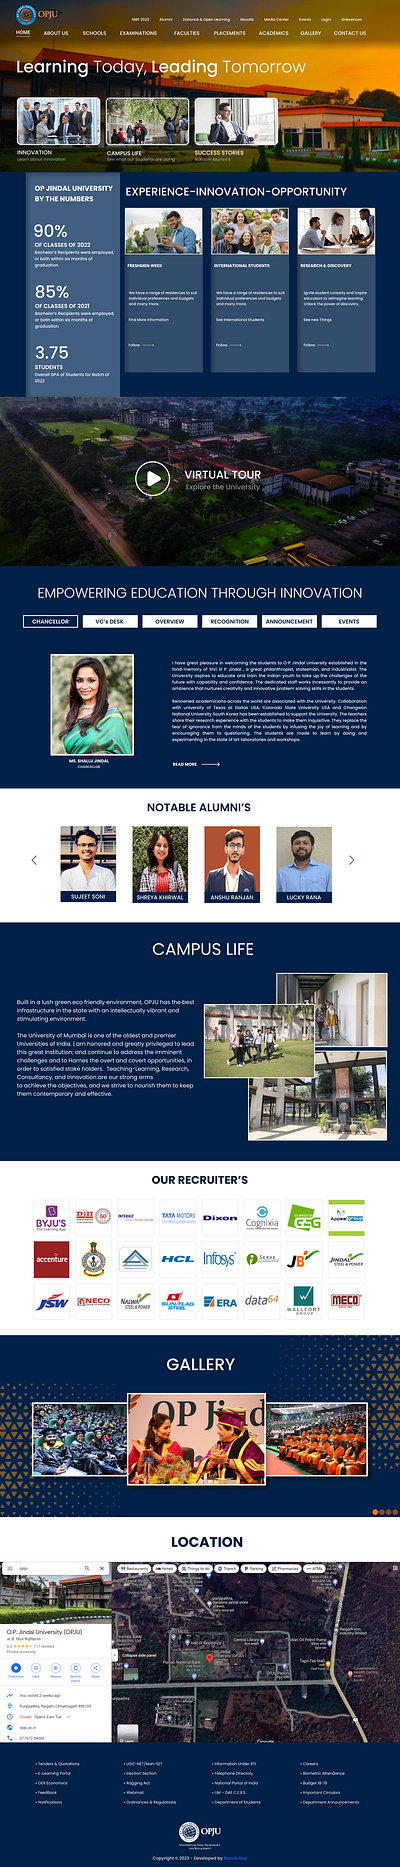 OPJU Campus Portal landing page design ui user interface ux website design